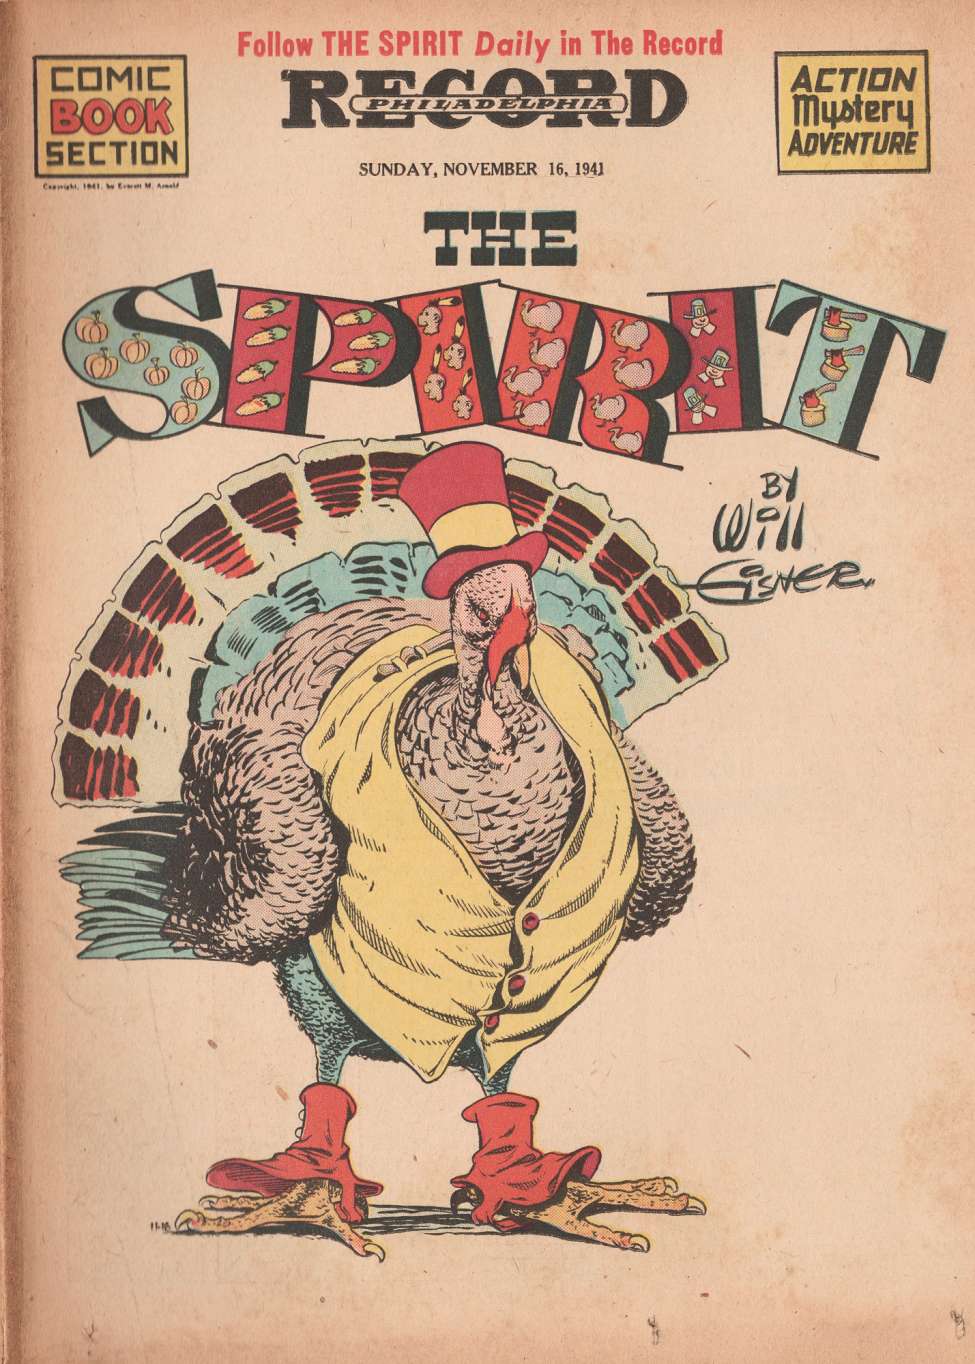 Book Cover For The Spirit (1941-11-16) - Philadelphia Record